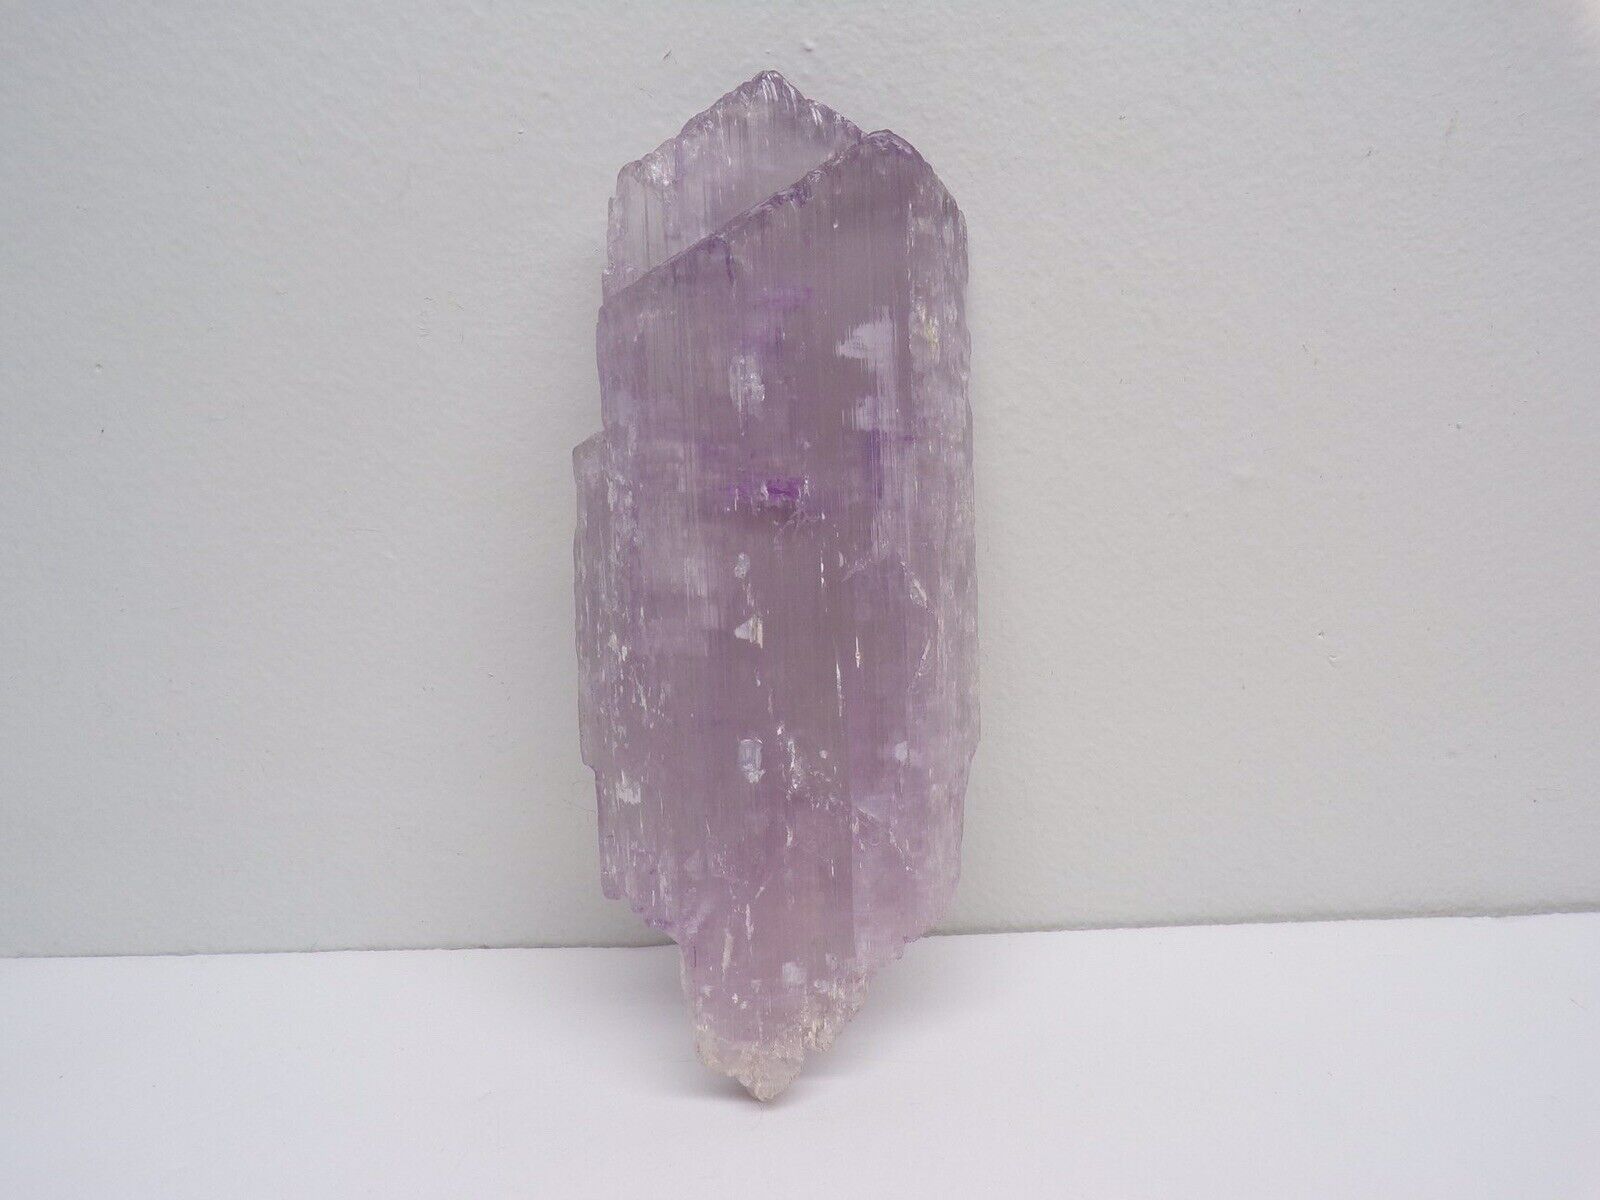 XL 6” Rare Terminated Pink Kunzite Crystal From Pakistan